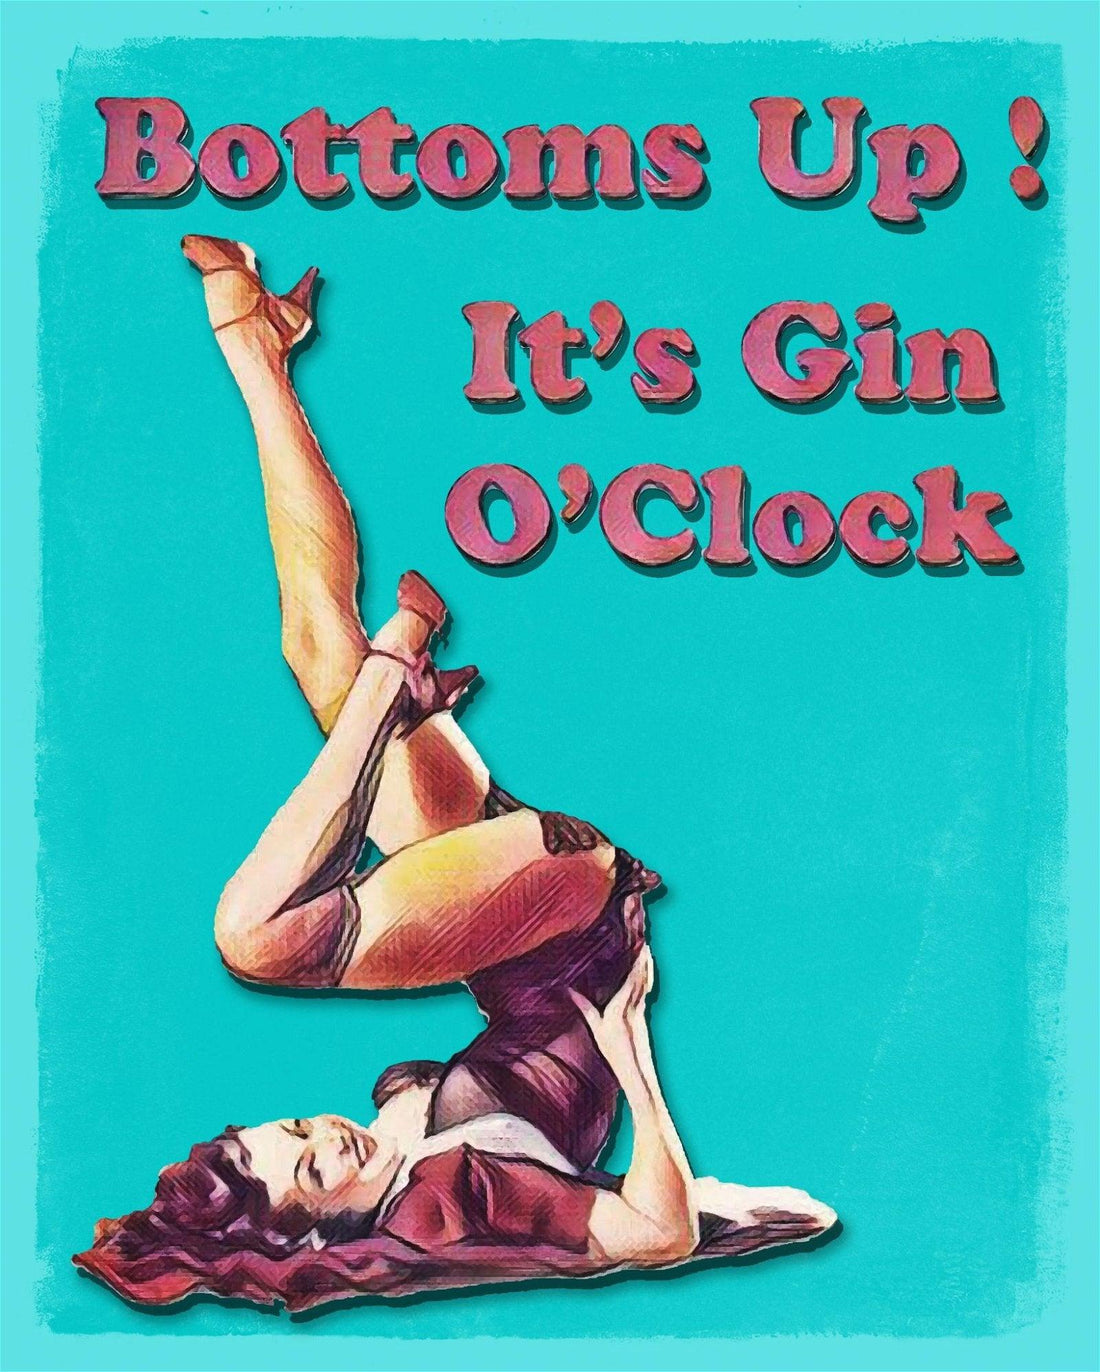 Vintage Metal Sign - Bottoms Up It's Gin O'Clock - £27.99 - Metal Sign 